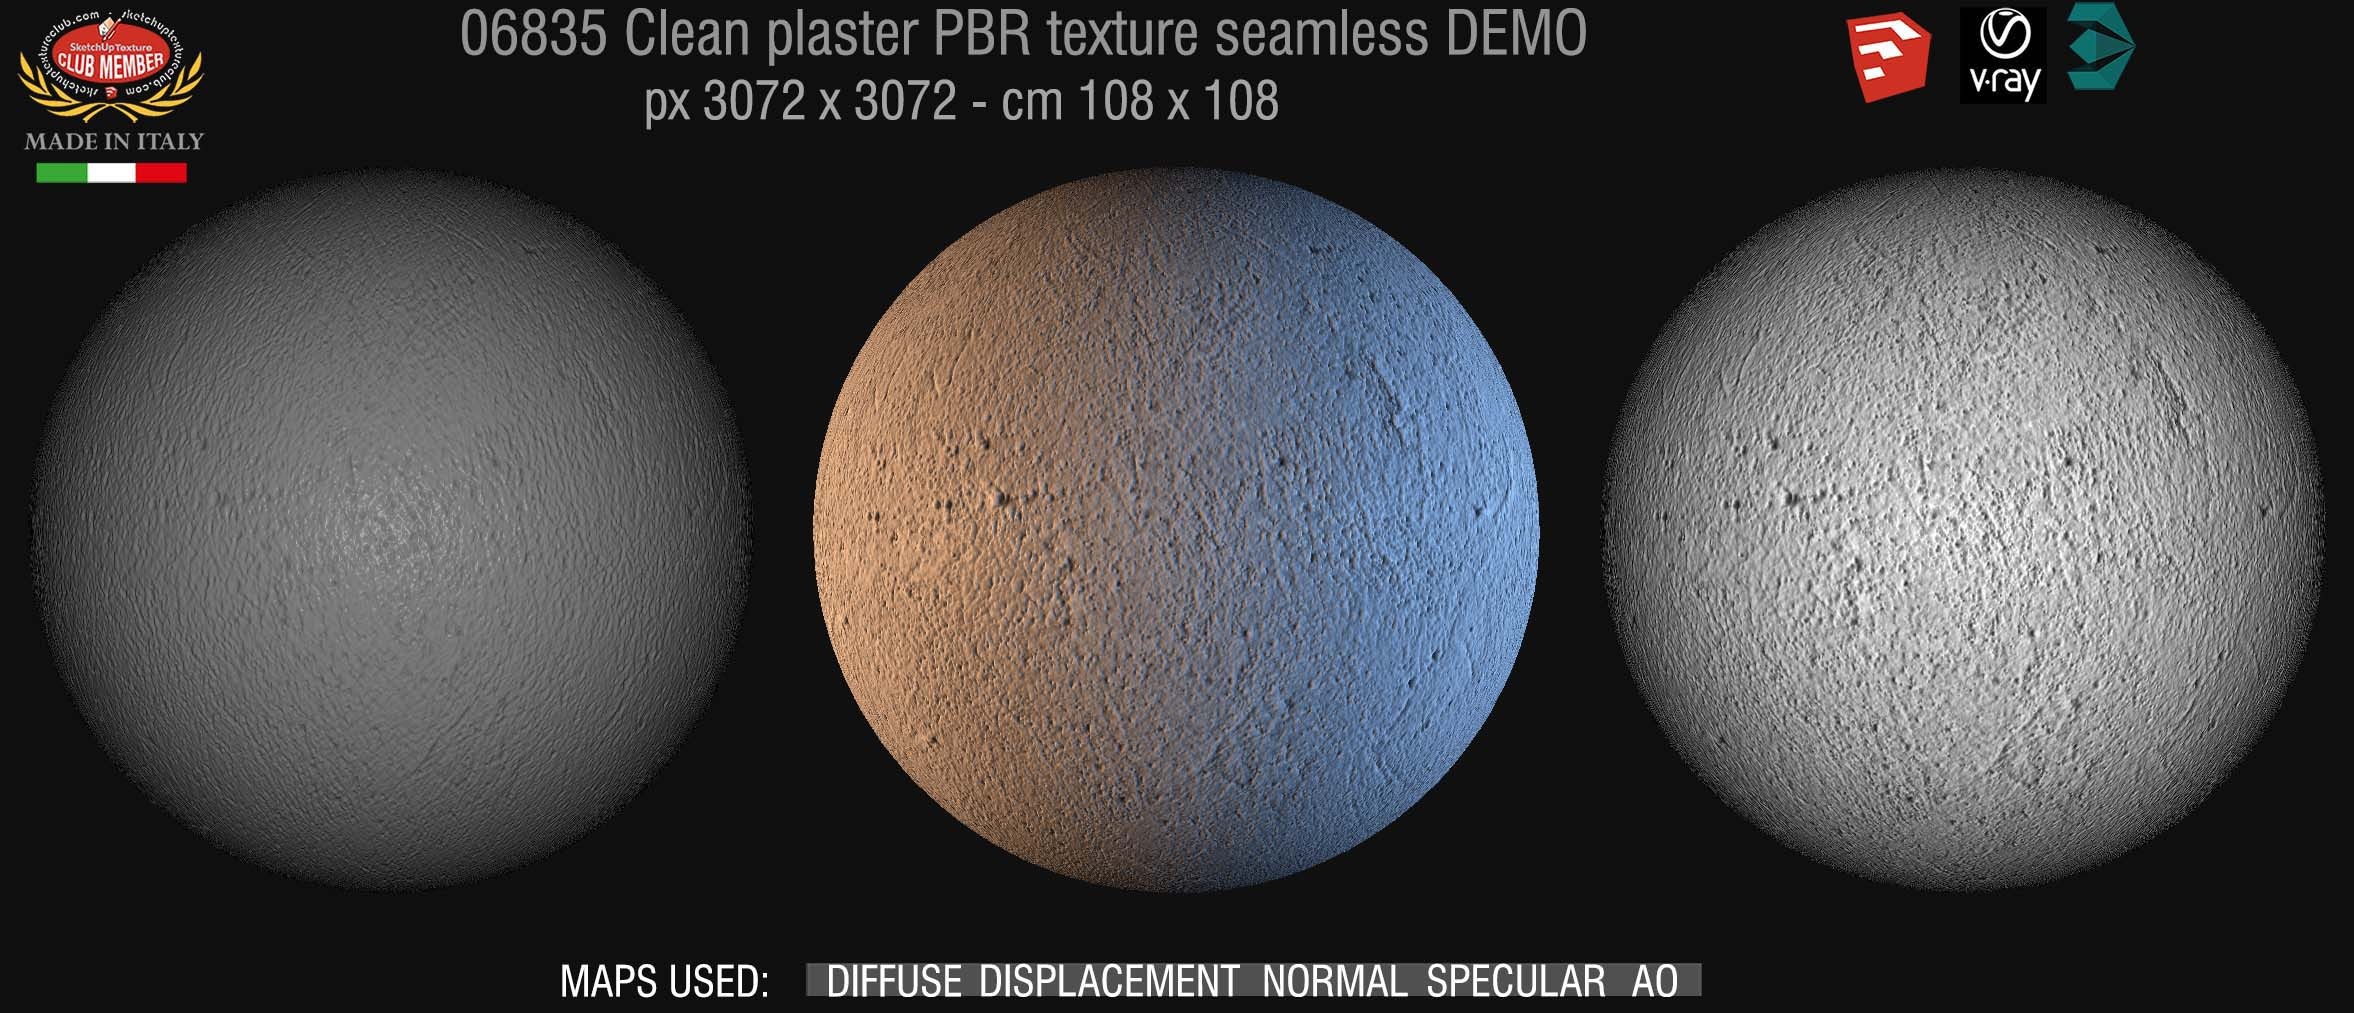 06835 clean plaster PBR texture seamless DEMO